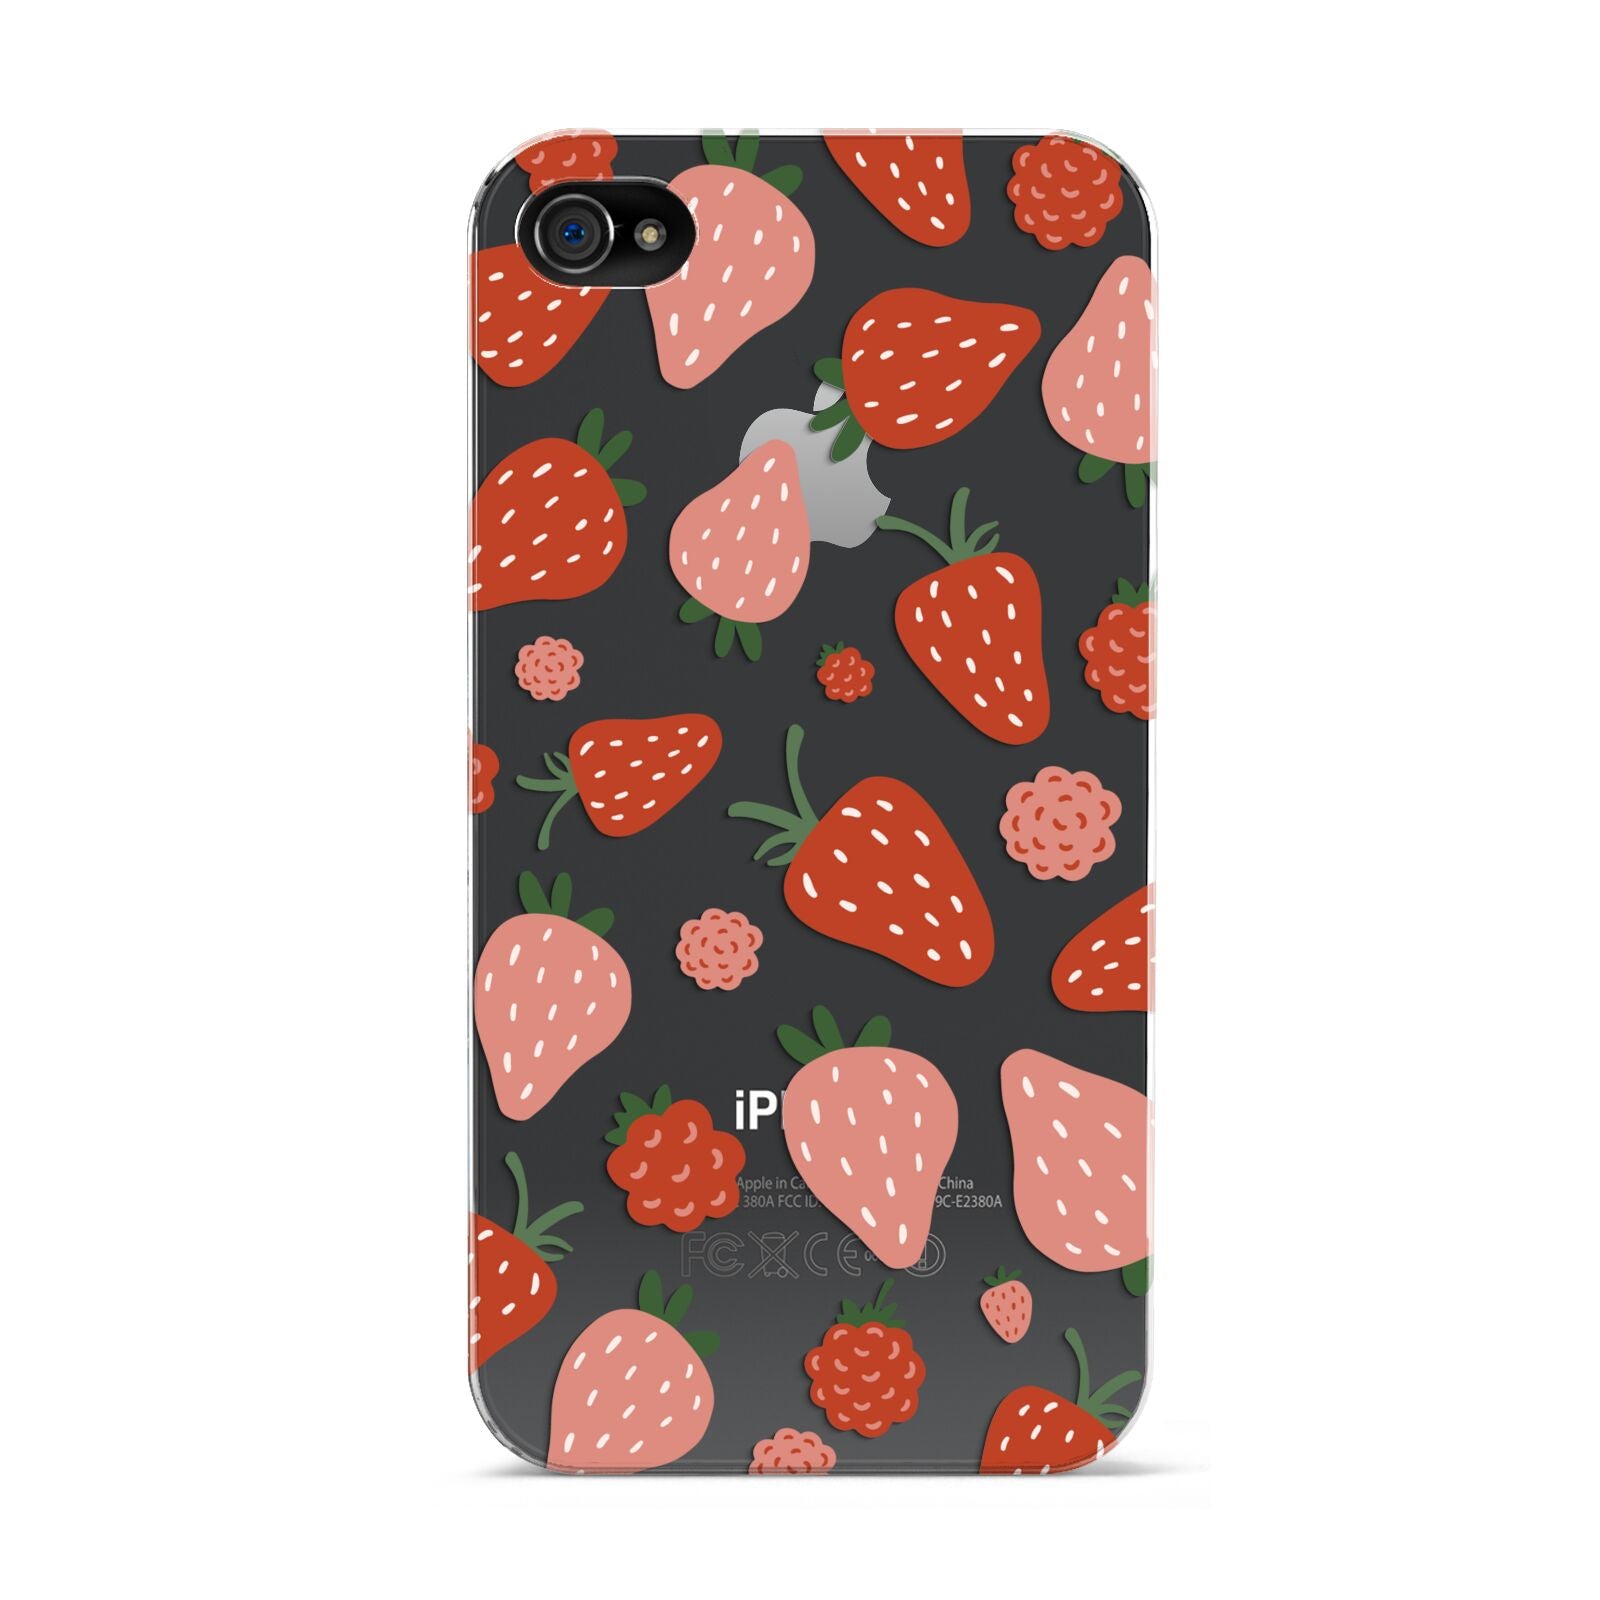 Strawberry Apple iPhone 4s Case